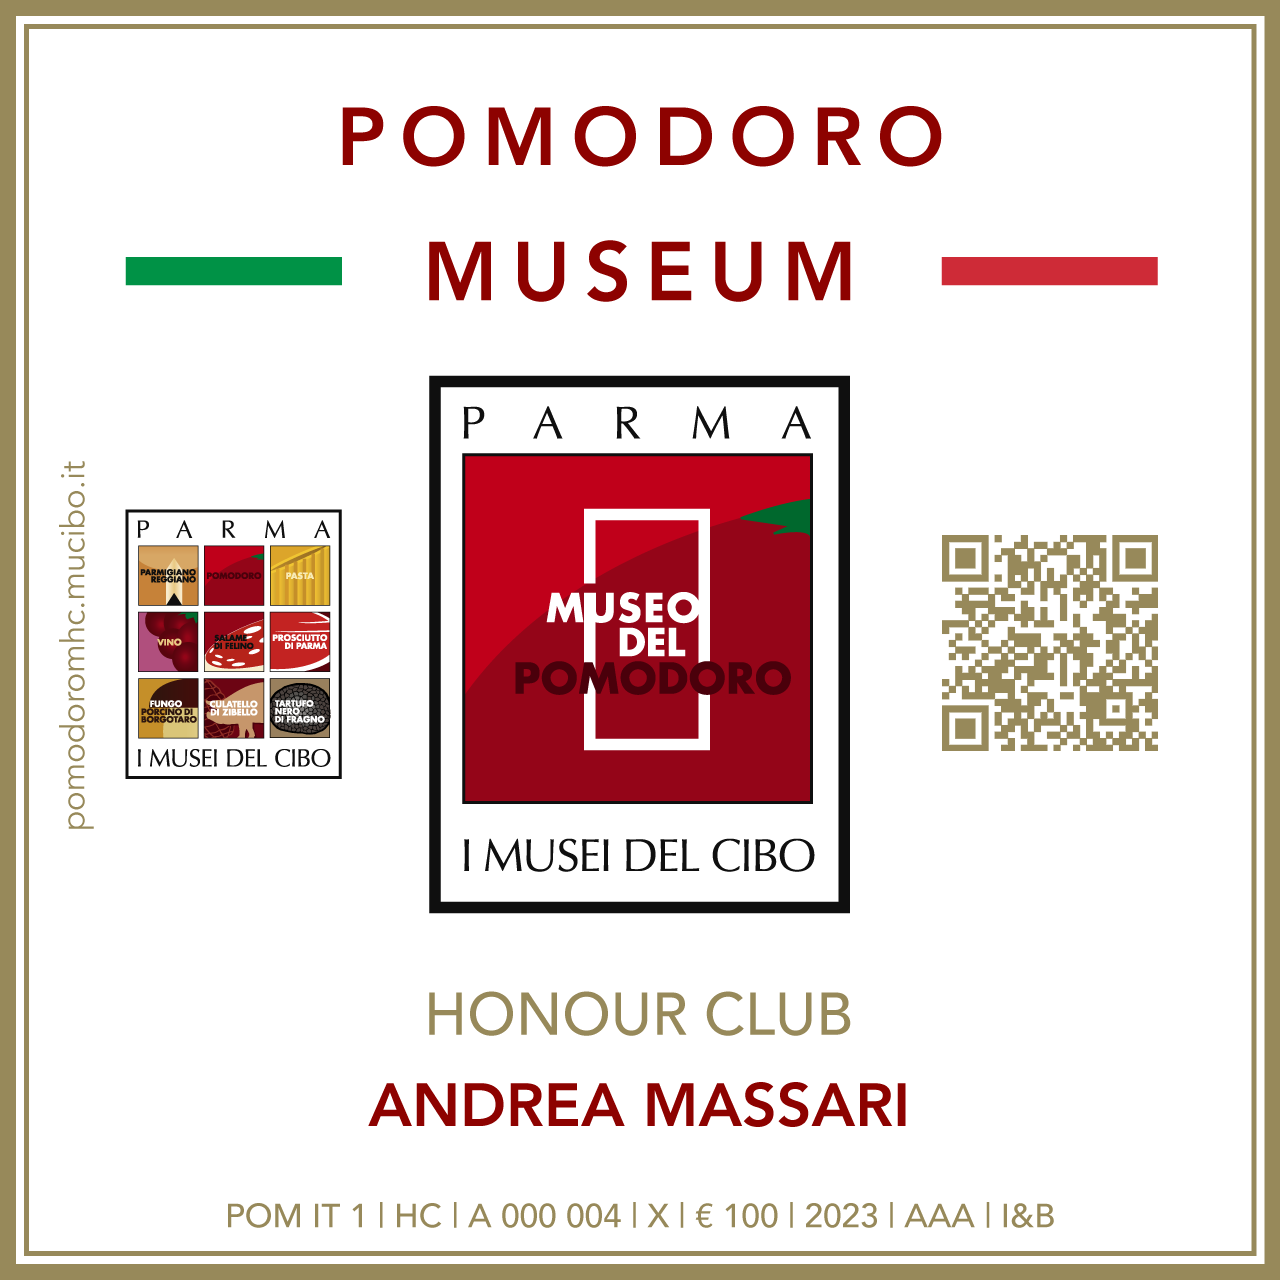 Pomodoro Museum Honour Club - Token Id A 000 004 - ANDREA MASSARI